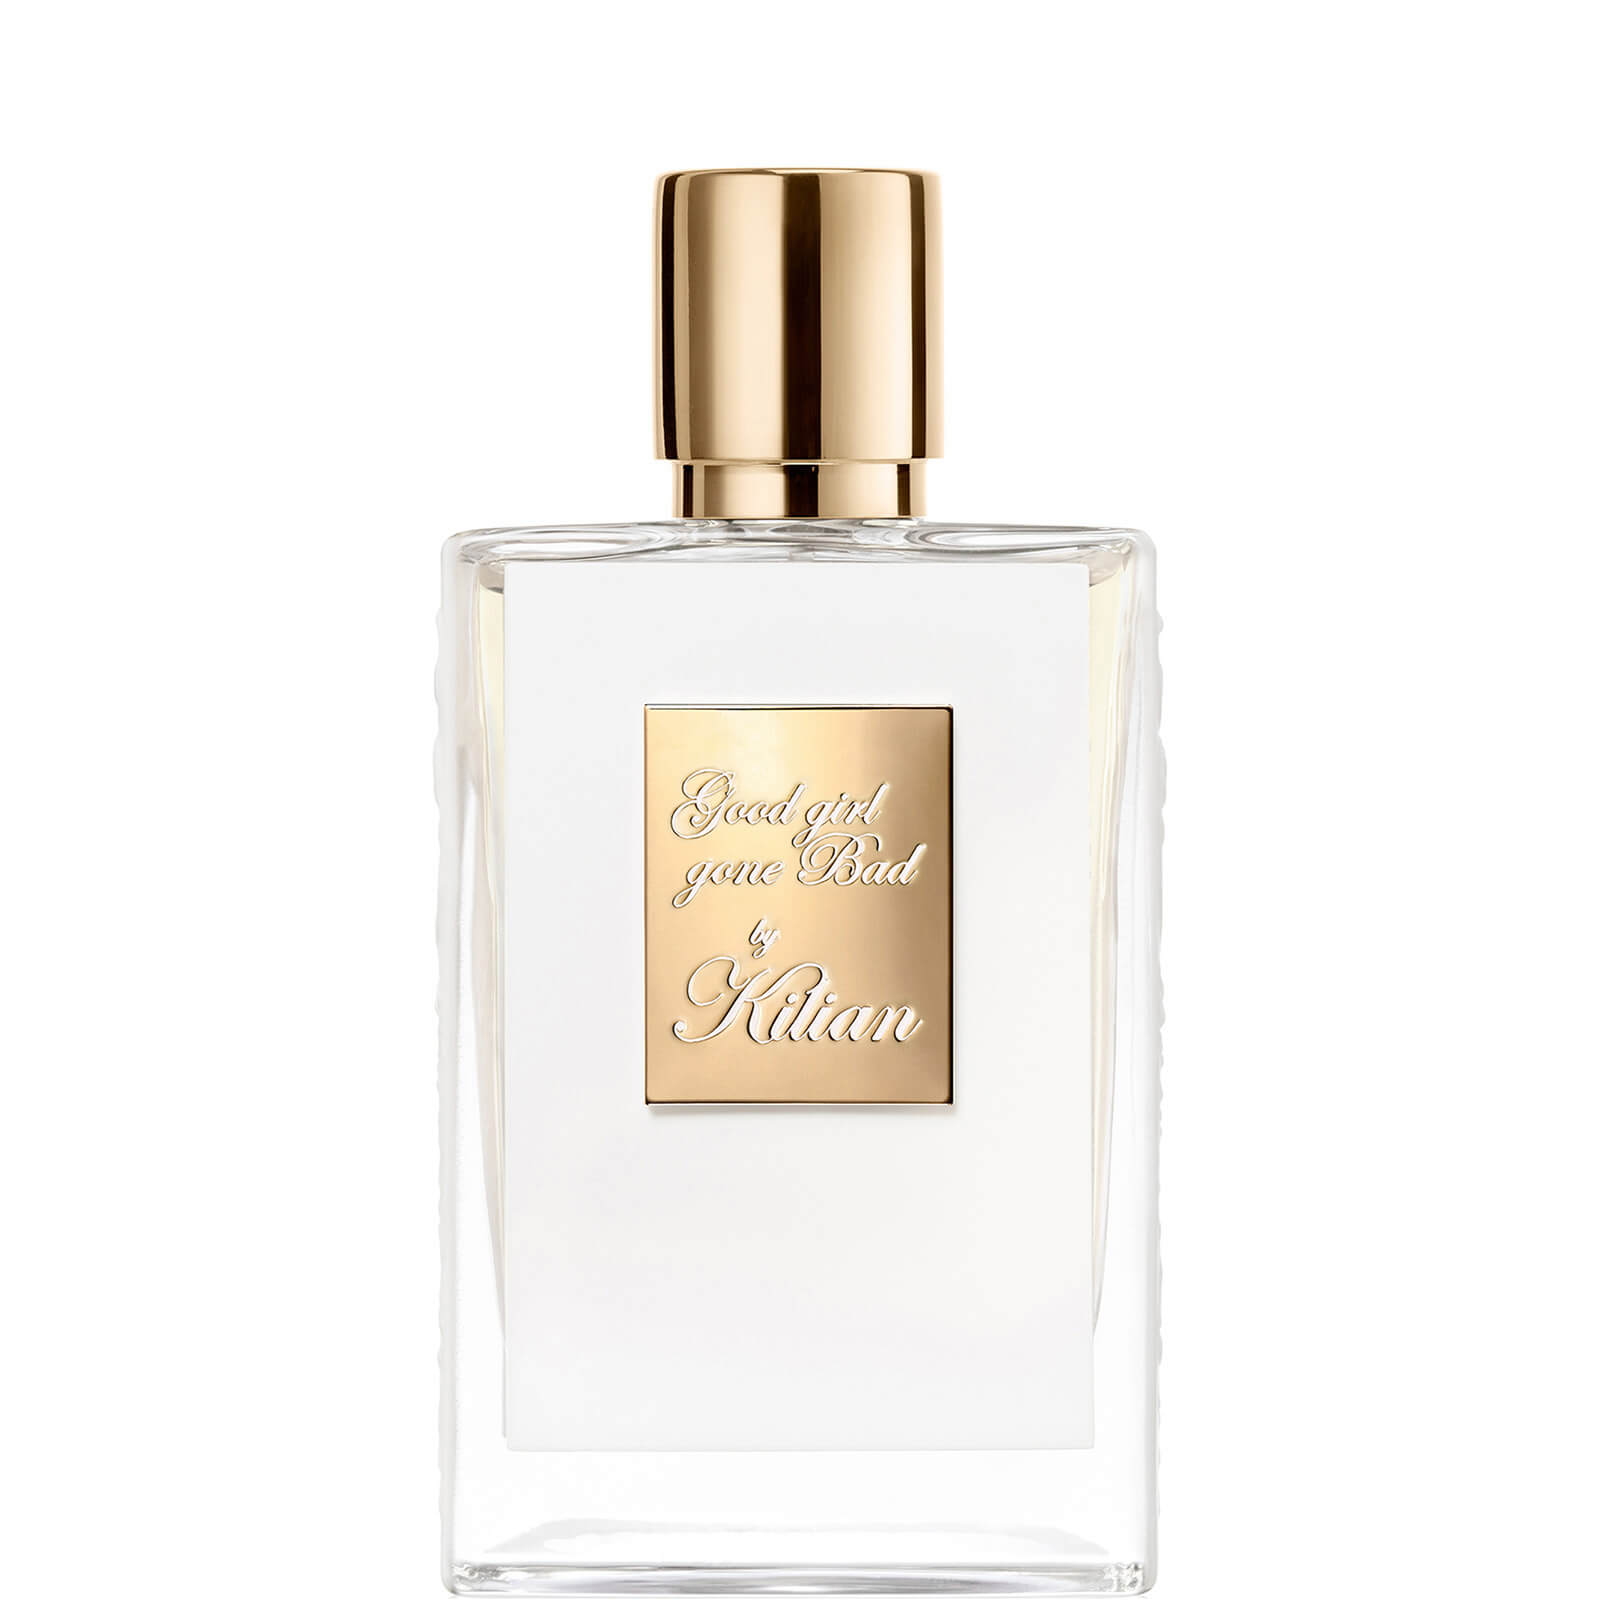 Photos - Women's Fragrance Kilian Good Girl Gone Bad Extreme Eau de Parfum - 50ml Perfume Spray 